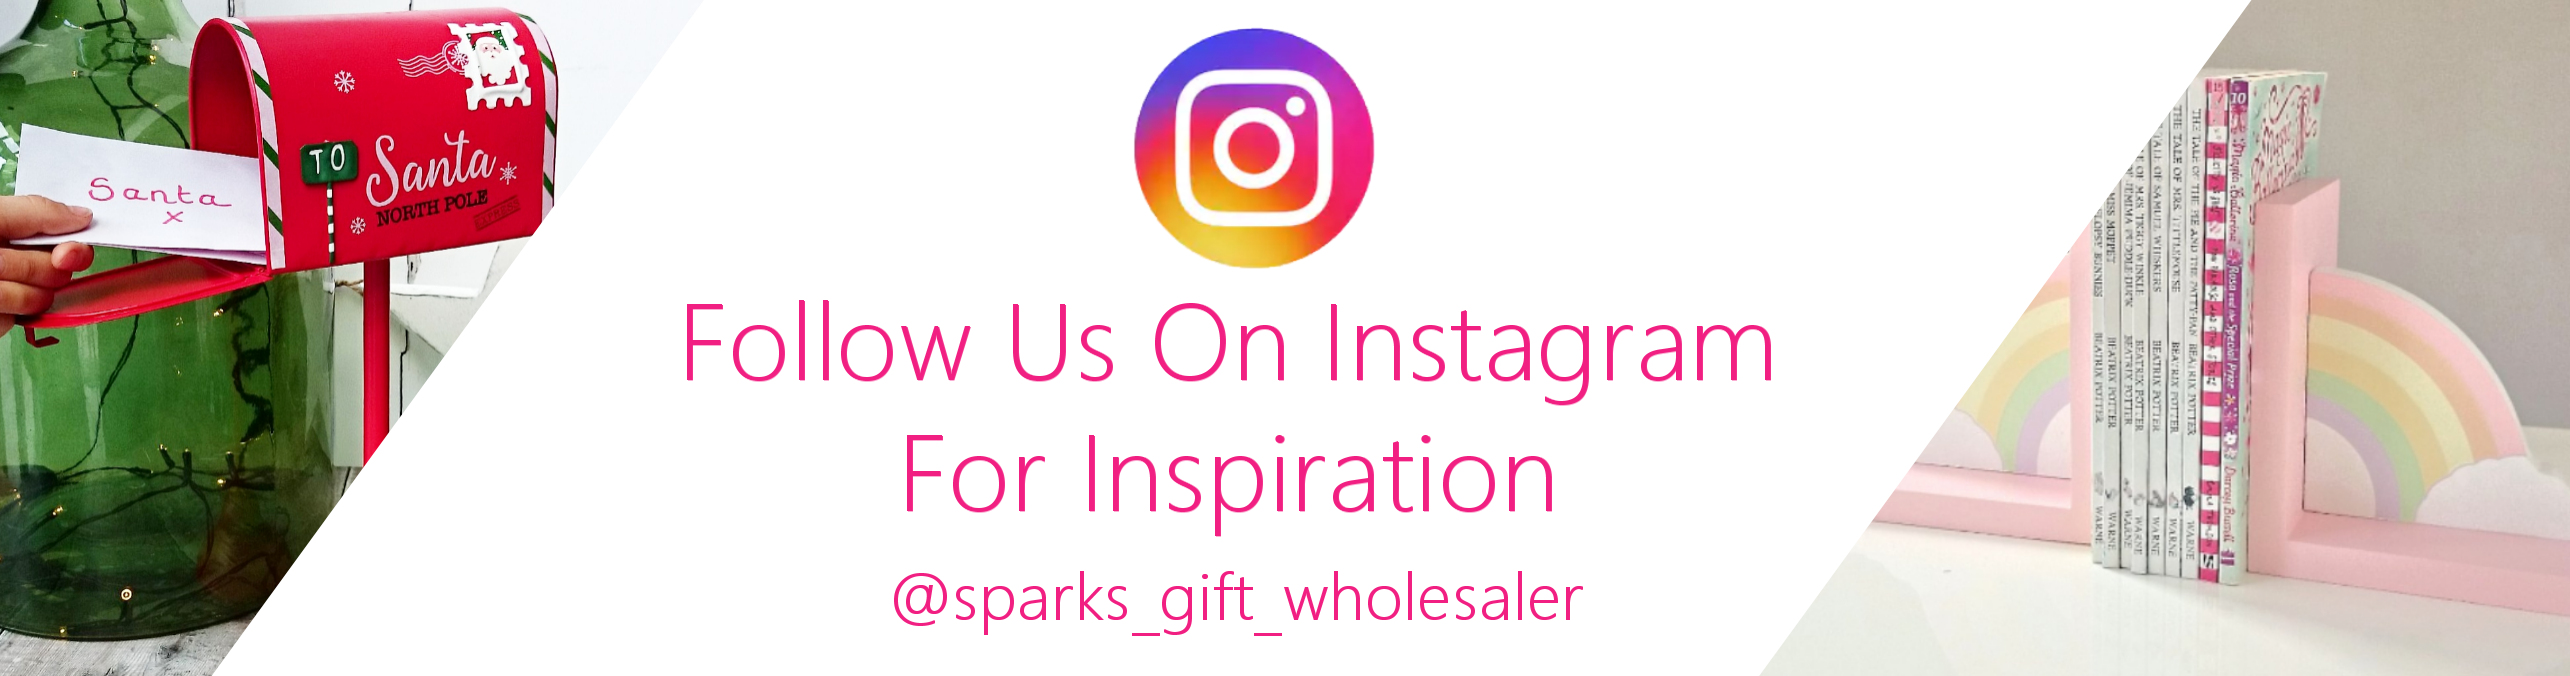 sparks gift wholesale instagram banner